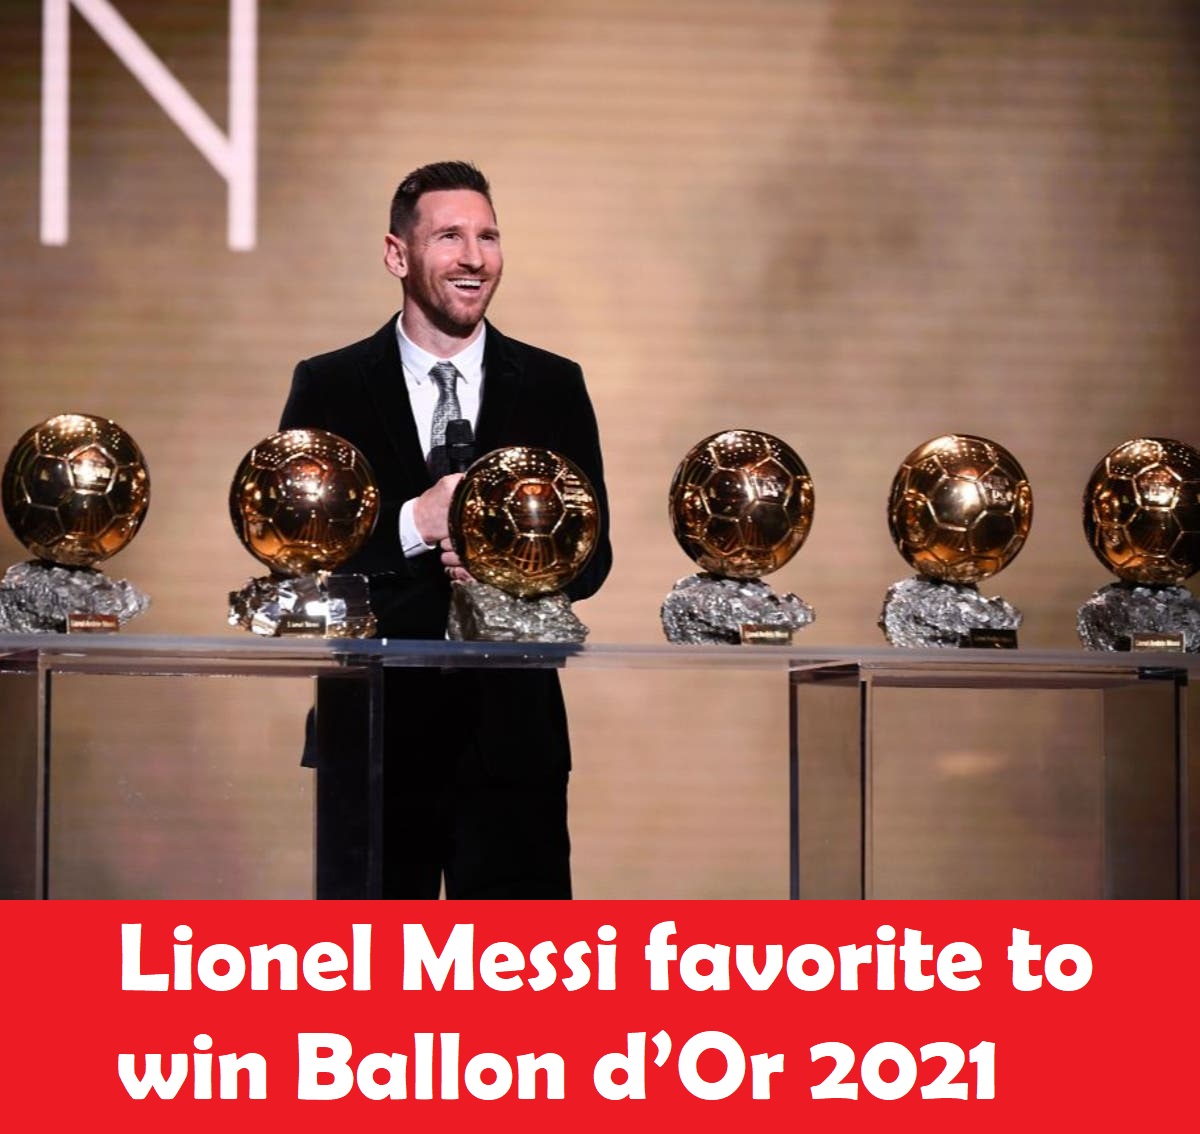 Lionel Messi favorite to win Ballon d’Or 2021 ahead of Robert Lewandowski - odds, shortlist, leading contenders